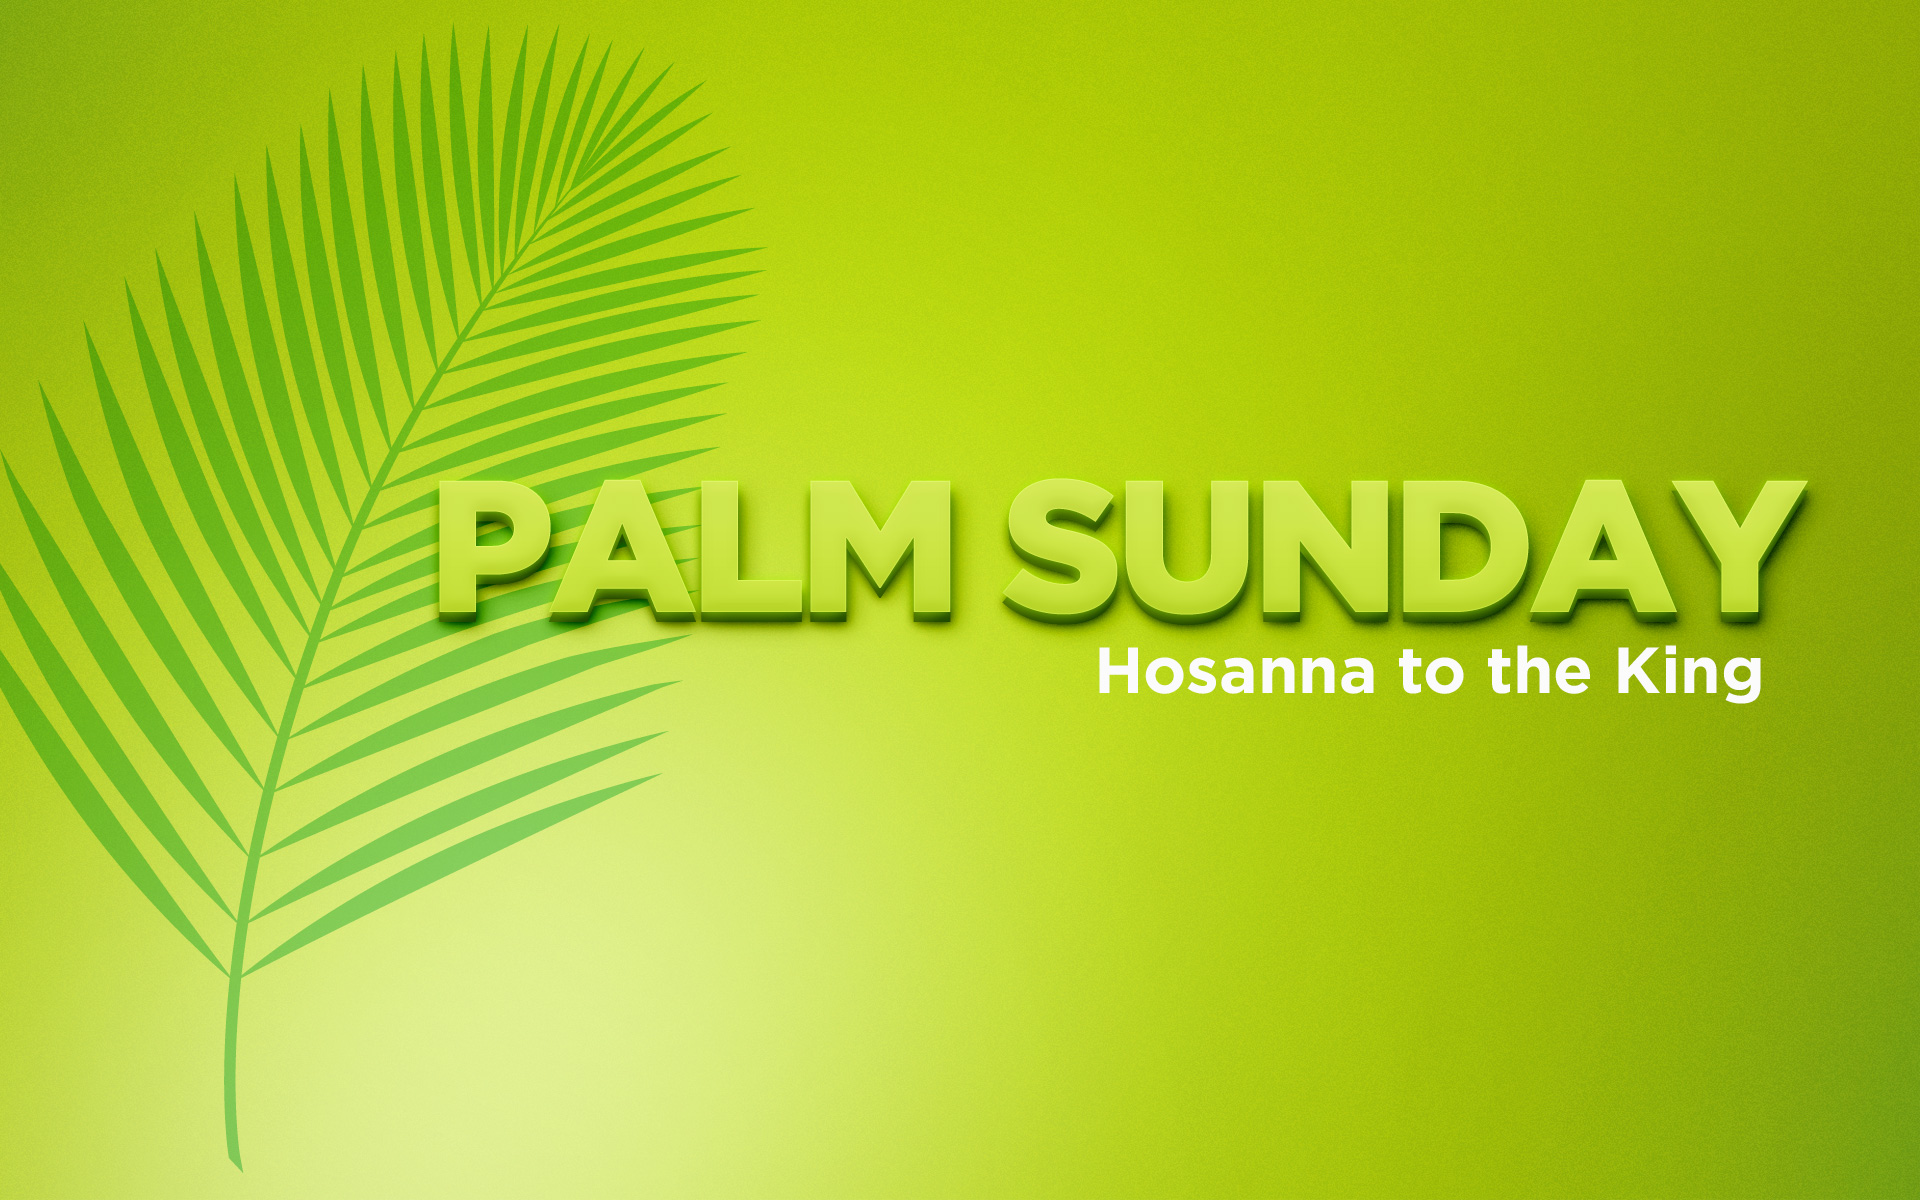 Palm Sunday – The Liturgy of the Palms